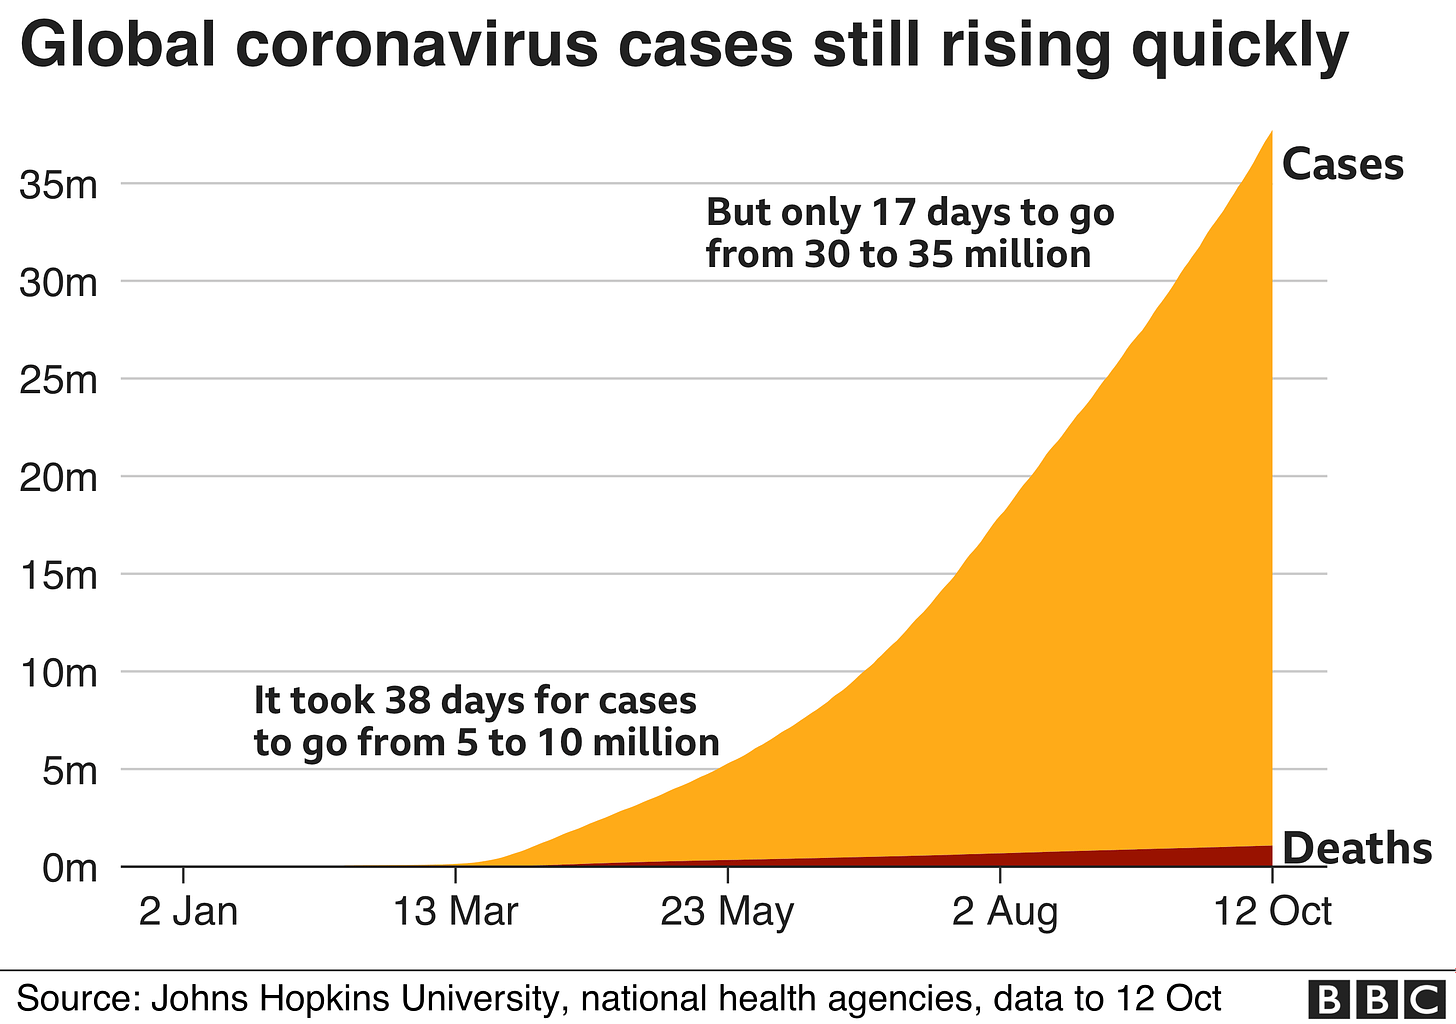 Covid-19 pandemic: Tracking the global coronavirus outbreak - BBC News